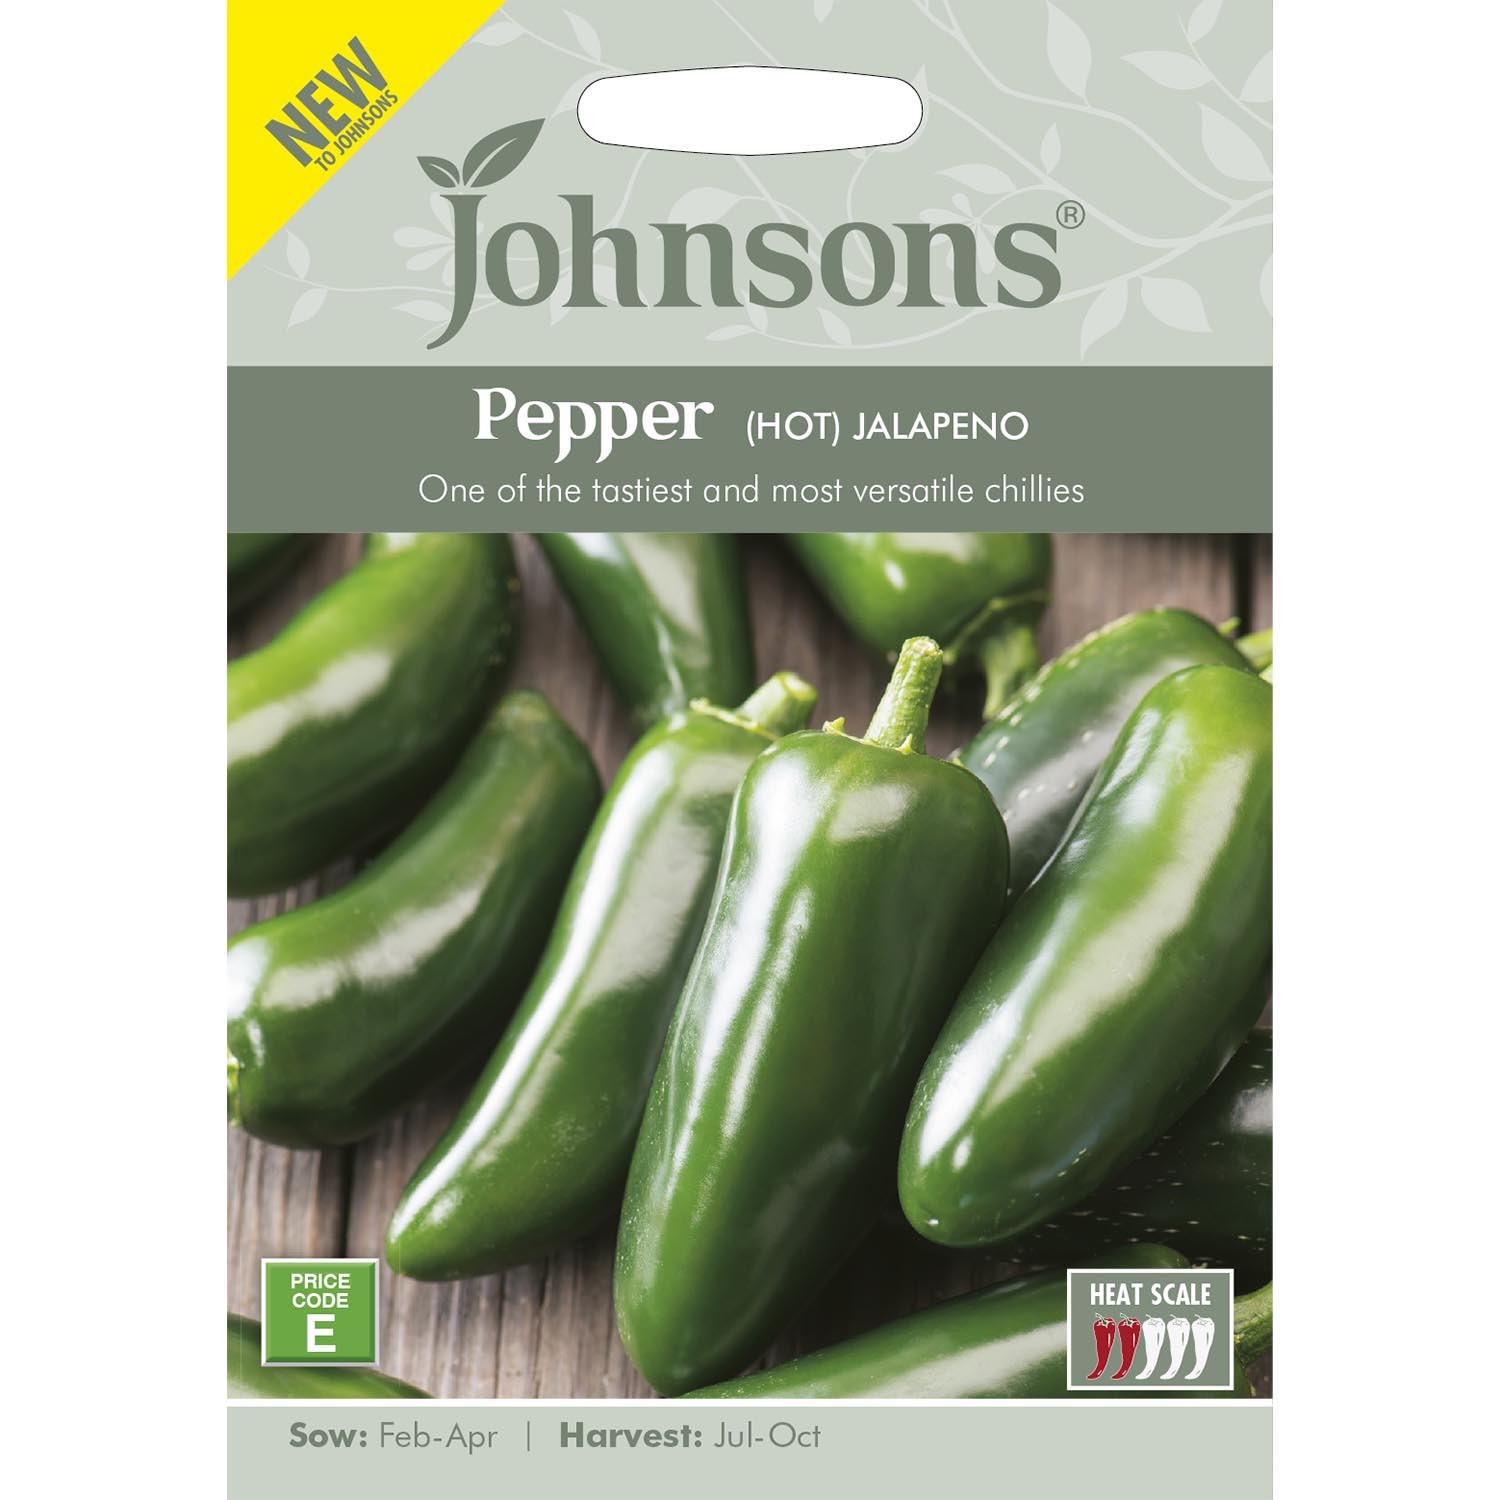 Johnsons Pepper Jalapeno Vegetable Seeds Image 2